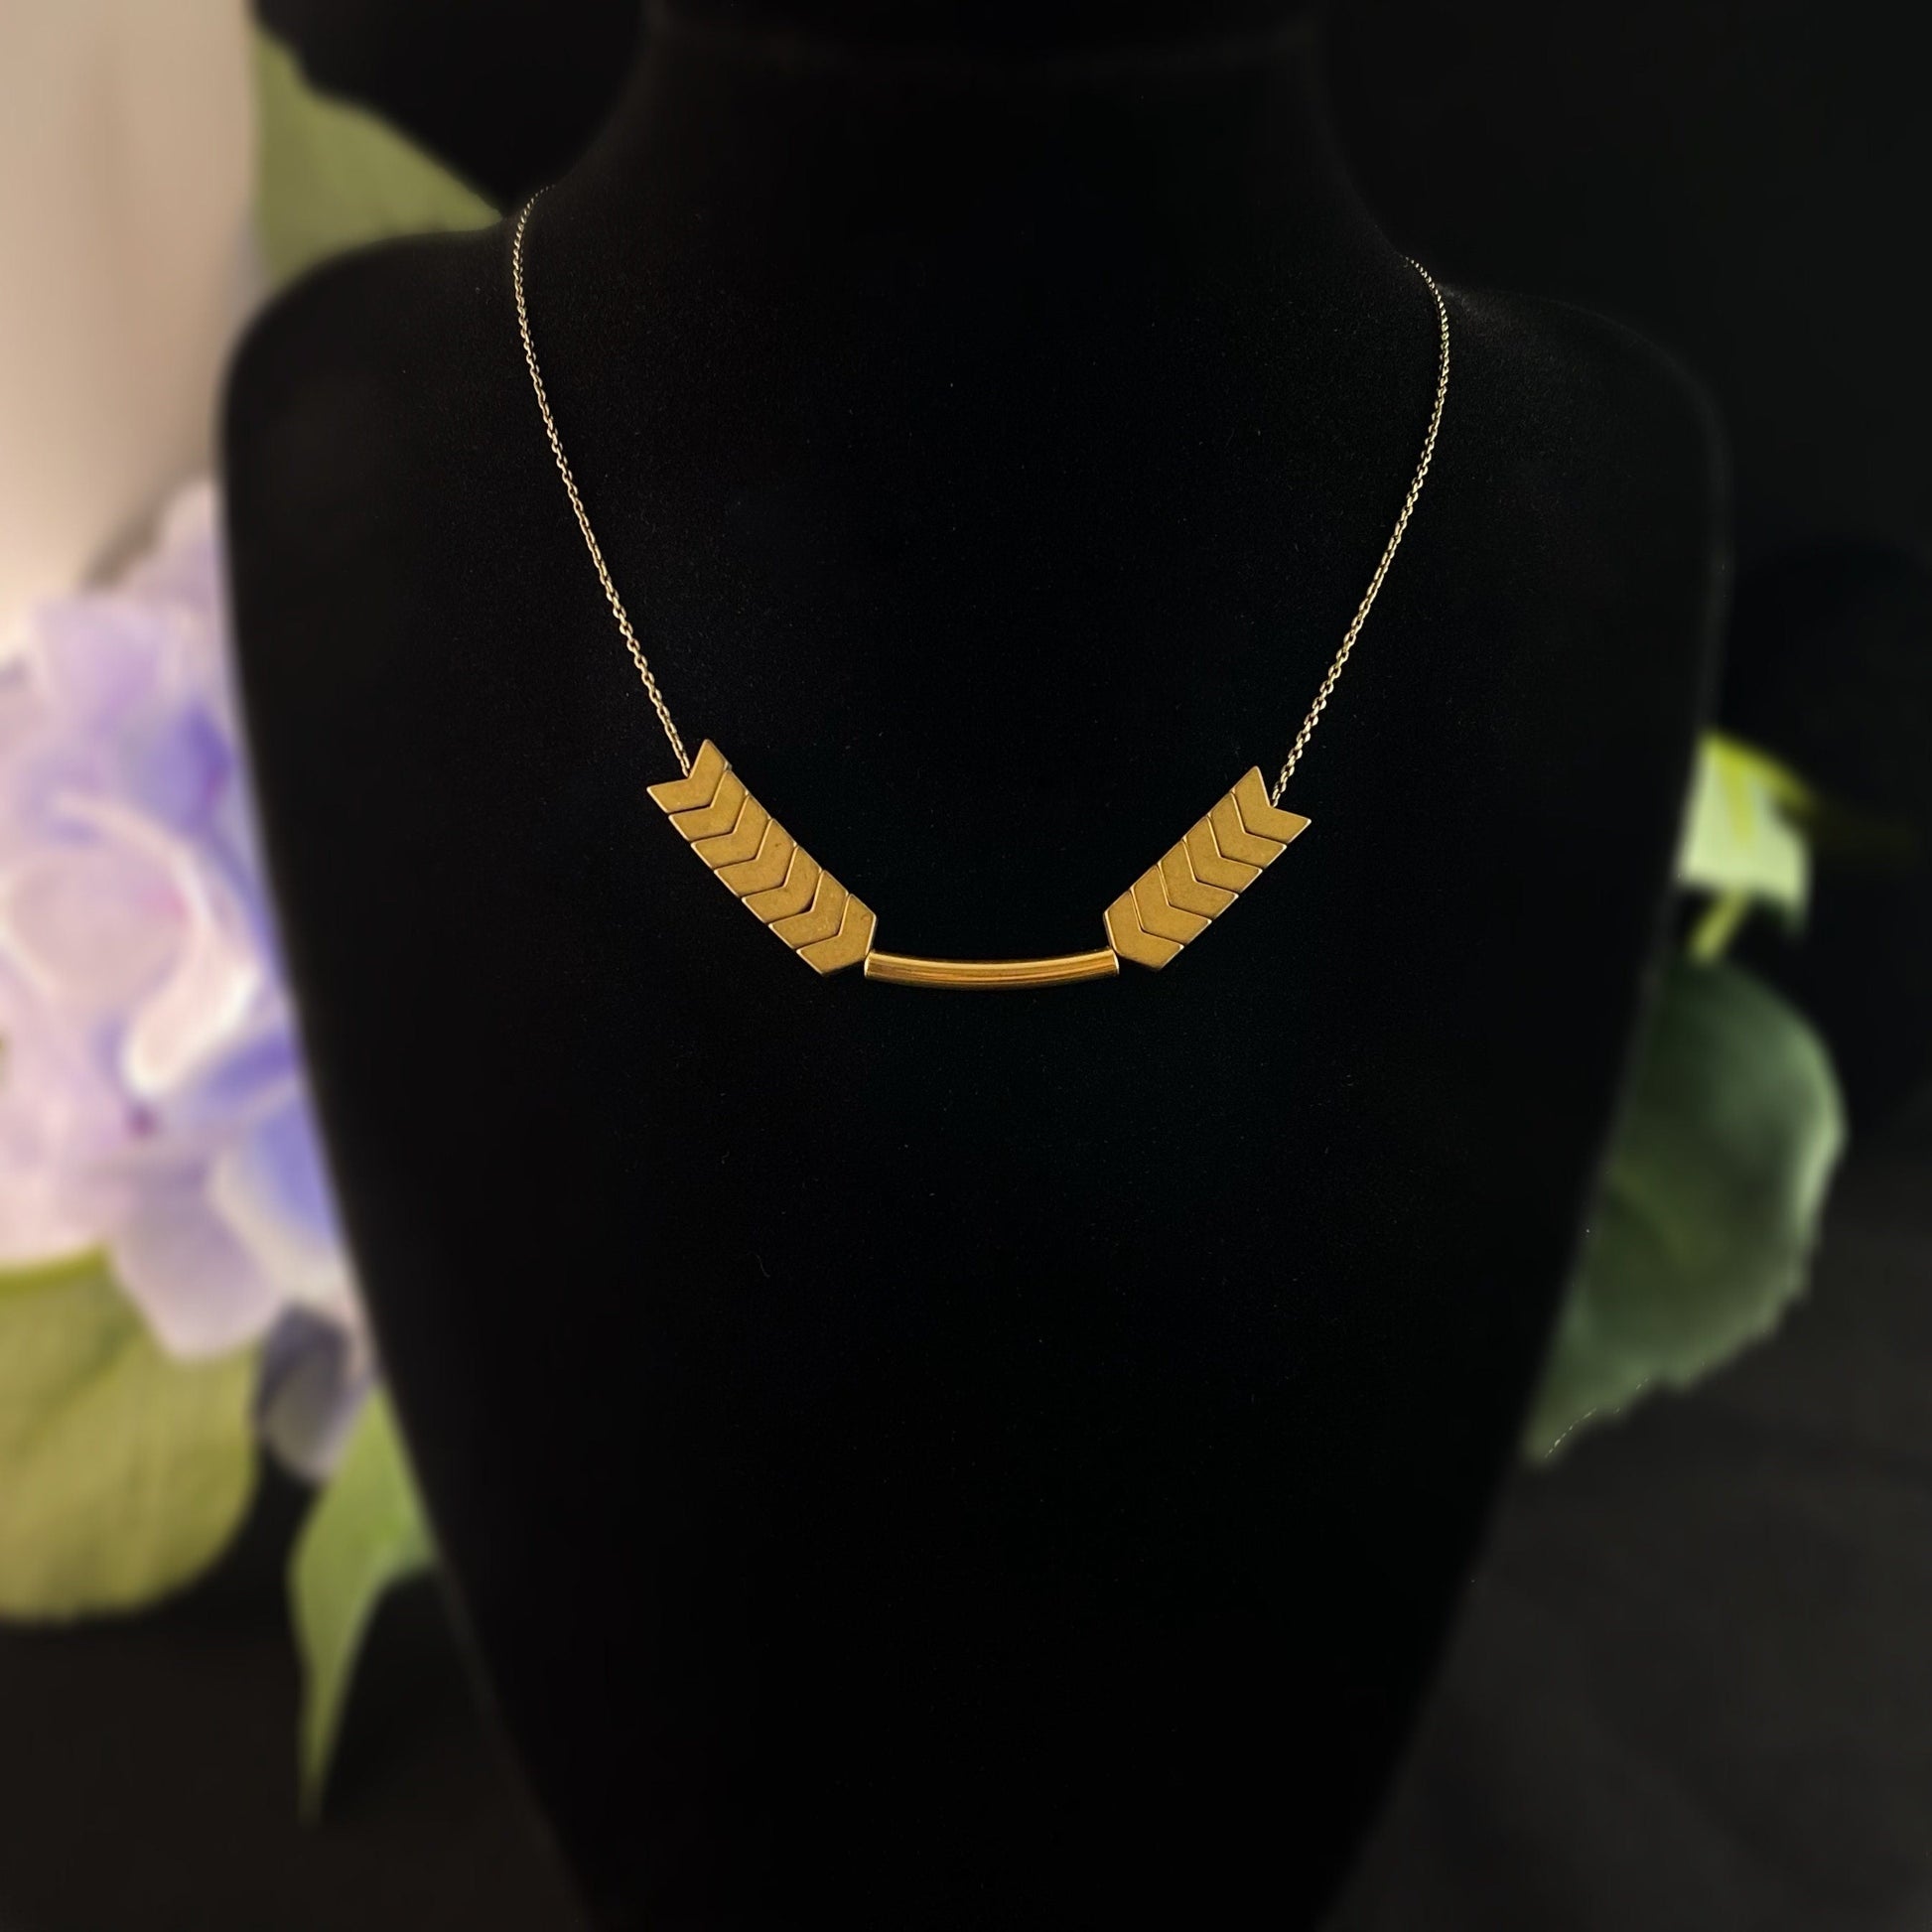 Gold Chevron Art Deco Style Necklace - Hematite and Brass - David Aubrey Jewelry